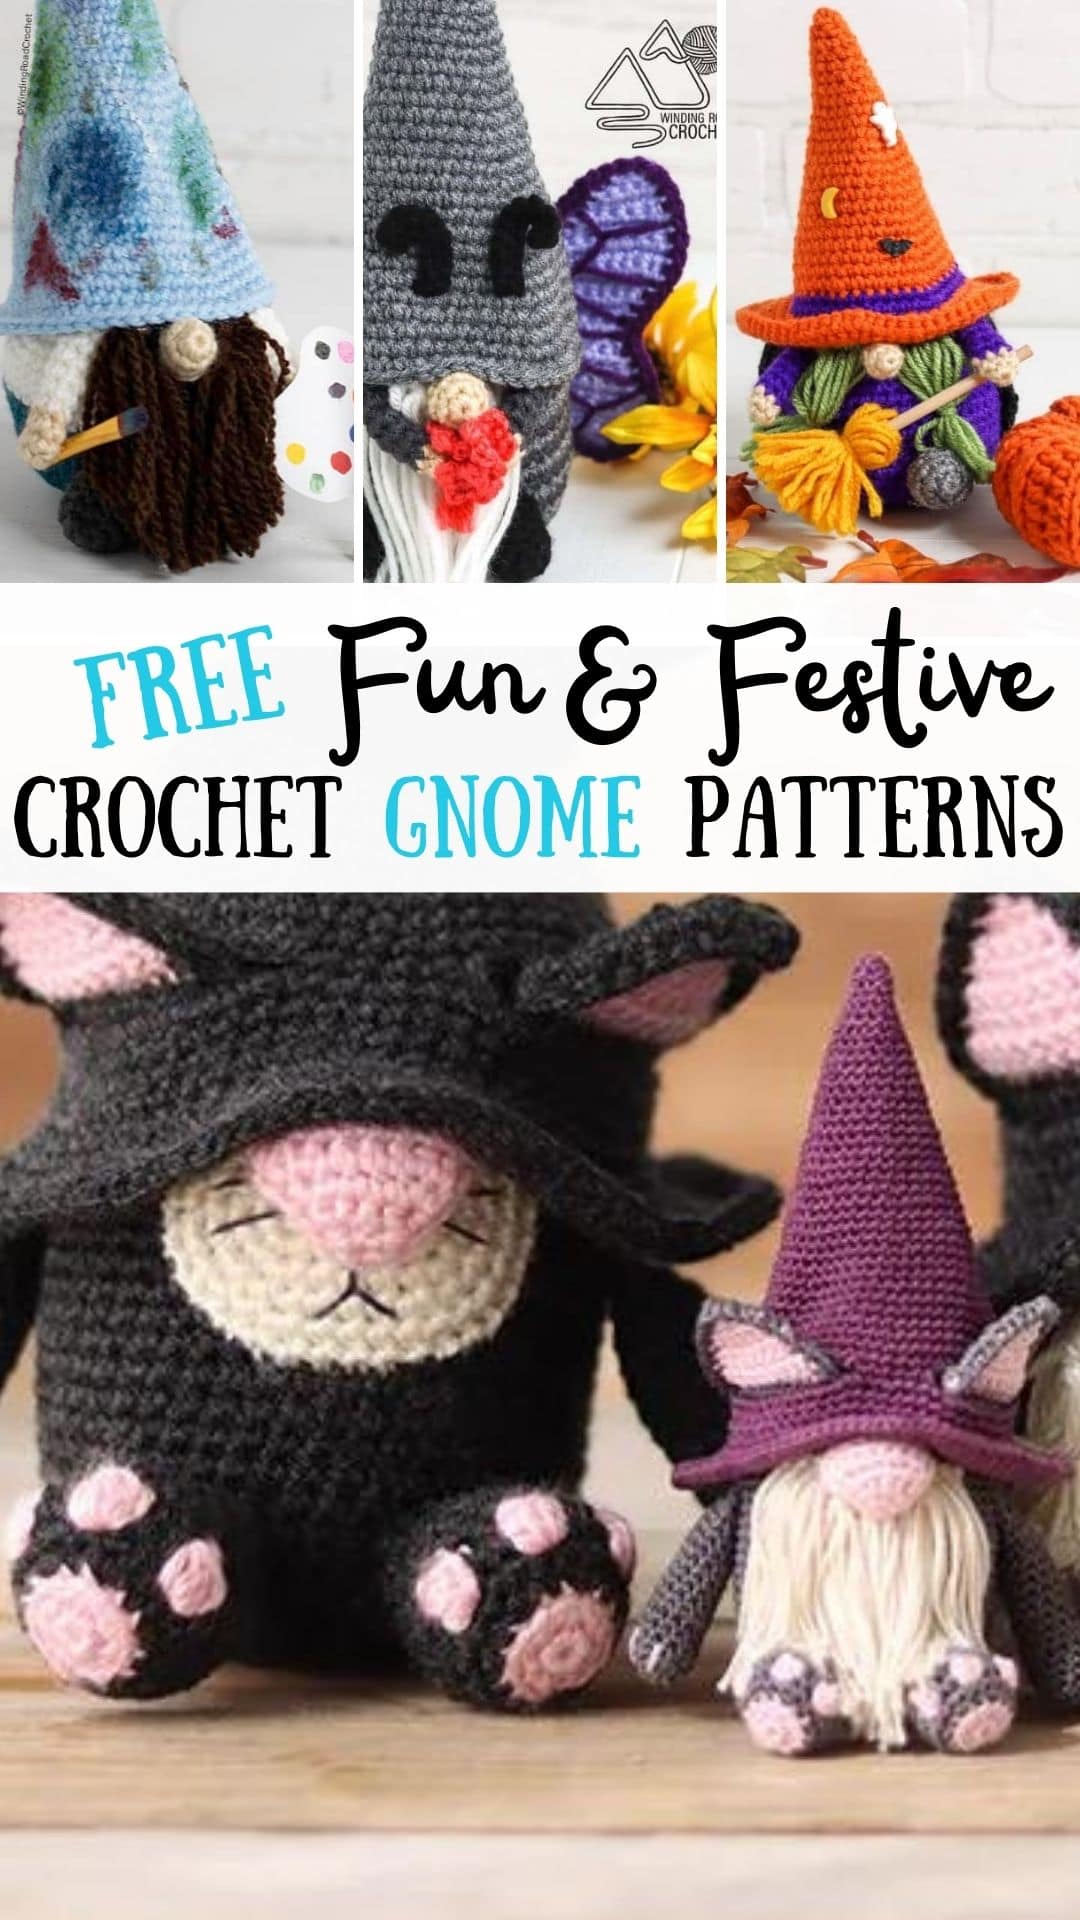 Fun and Festive crochet gnome patterns